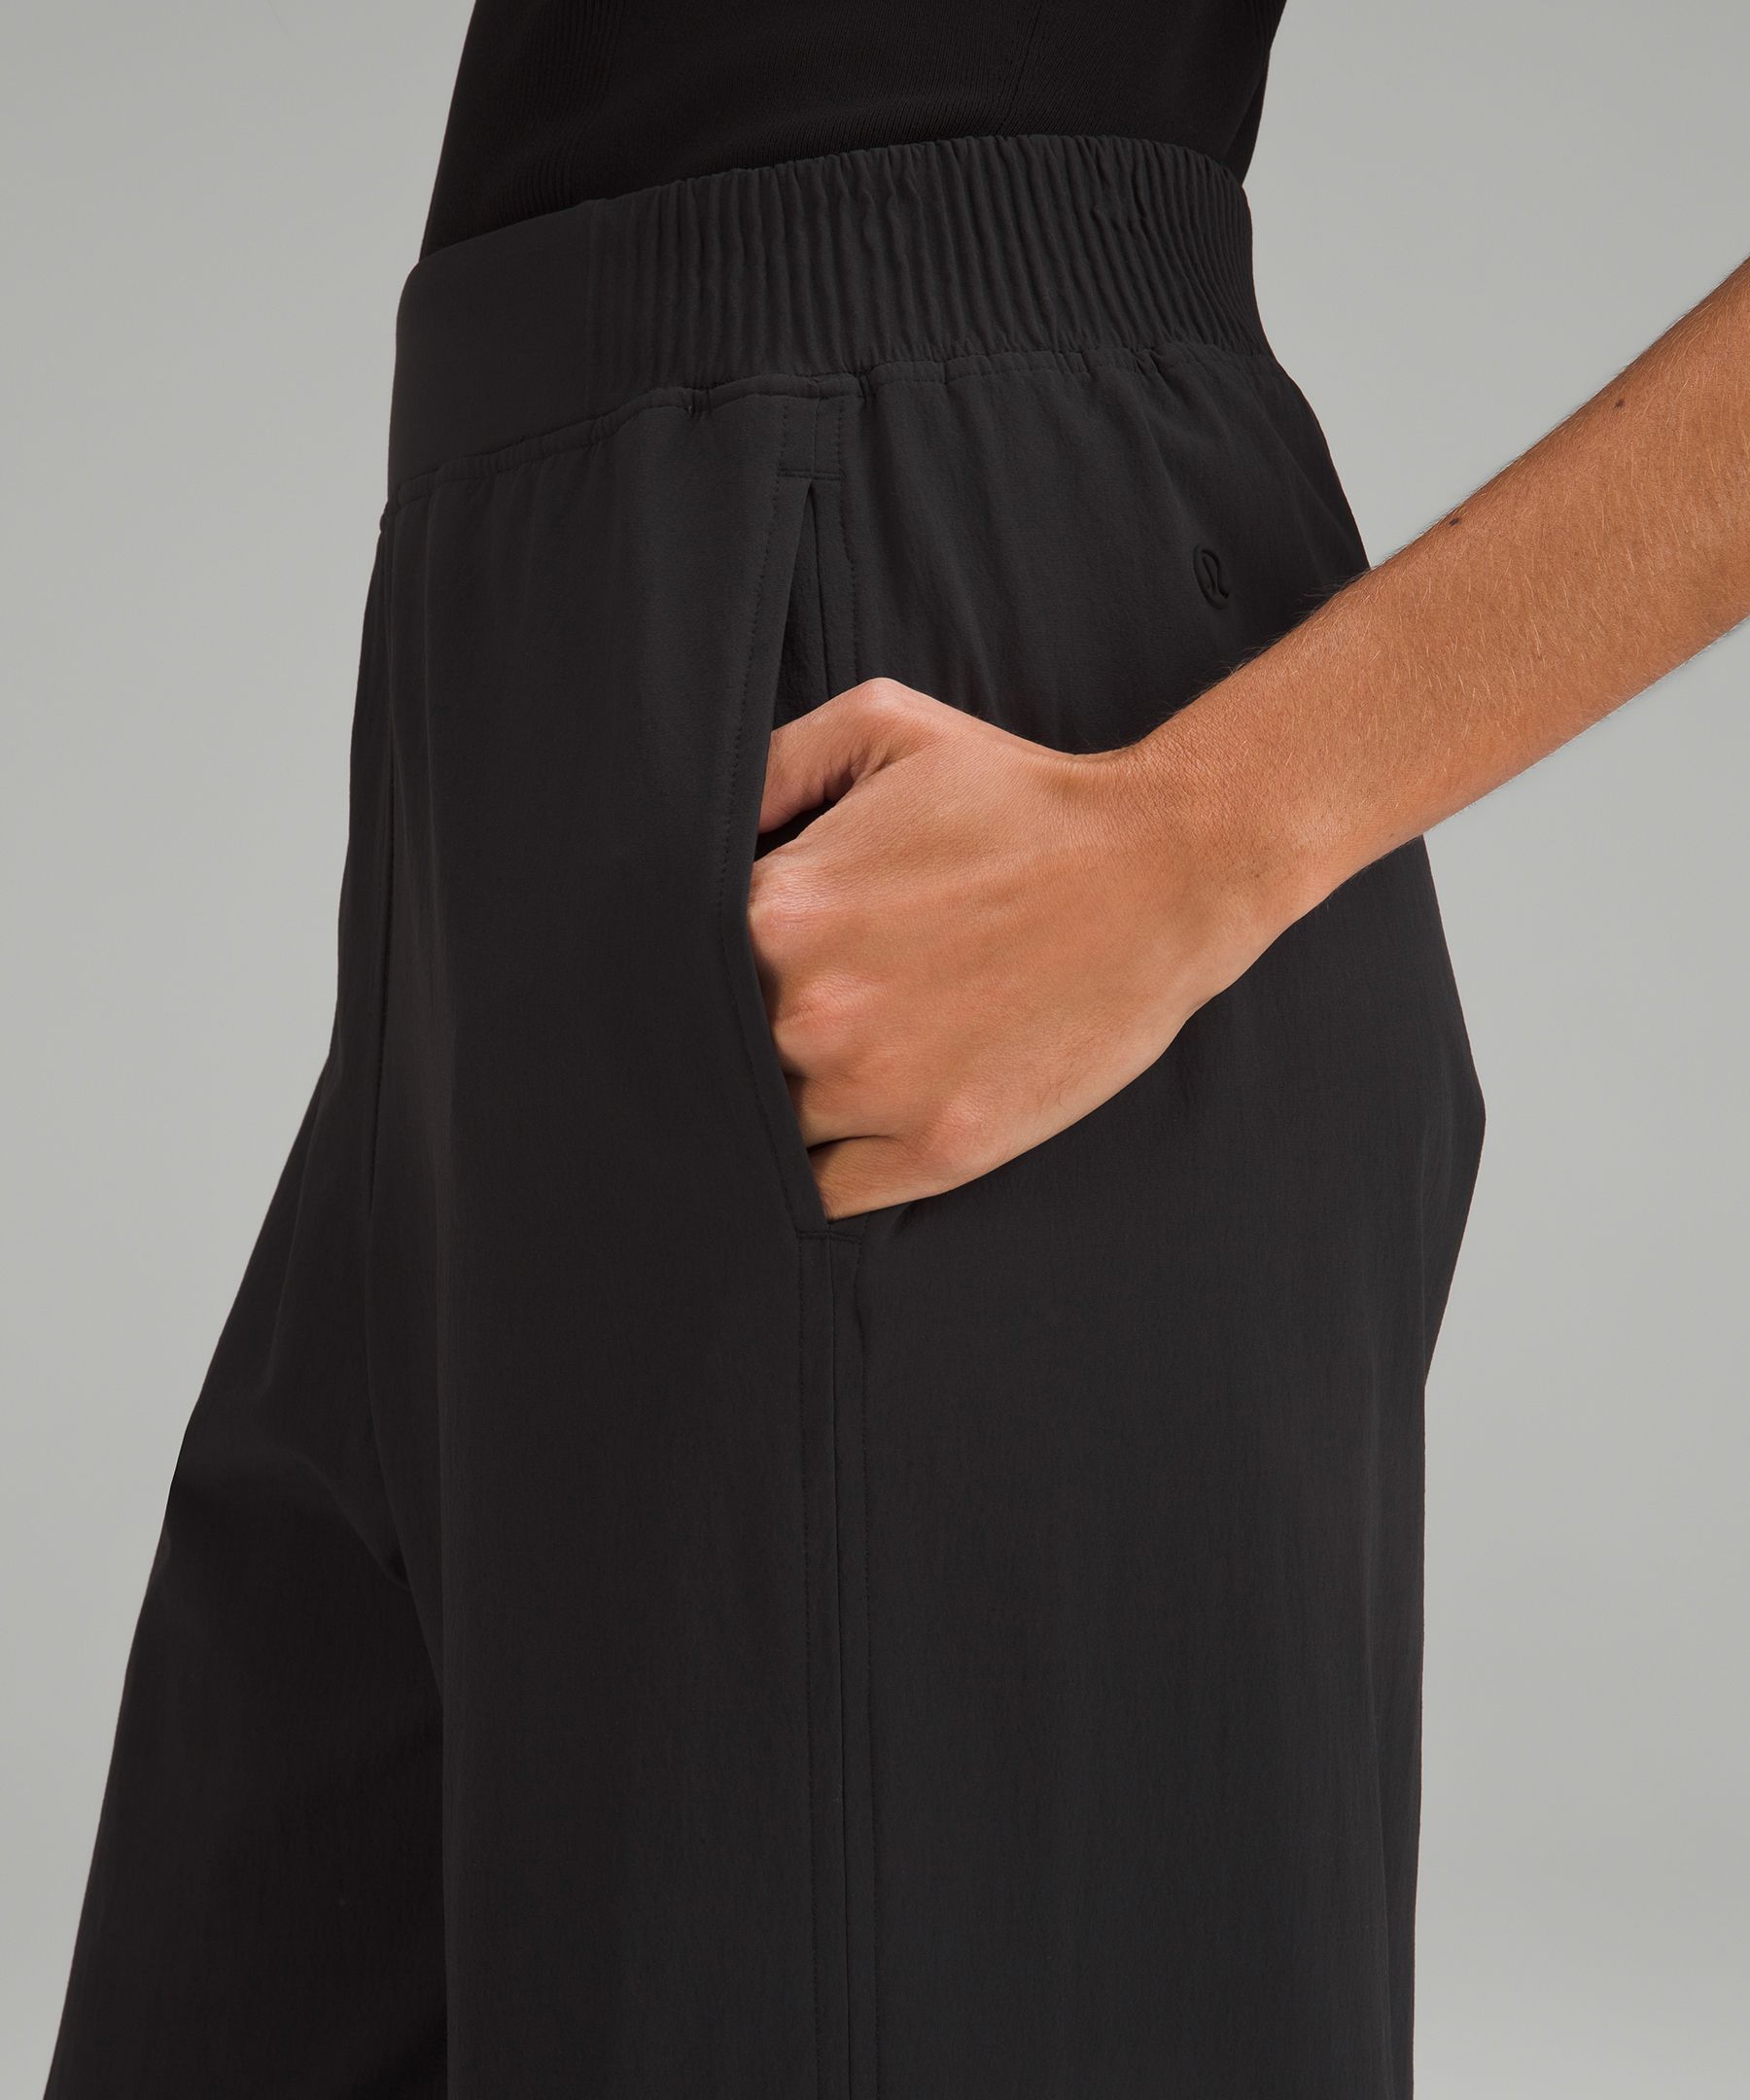 Stretch Woven High-Rise Wide-Leg Pant, Women's Pants